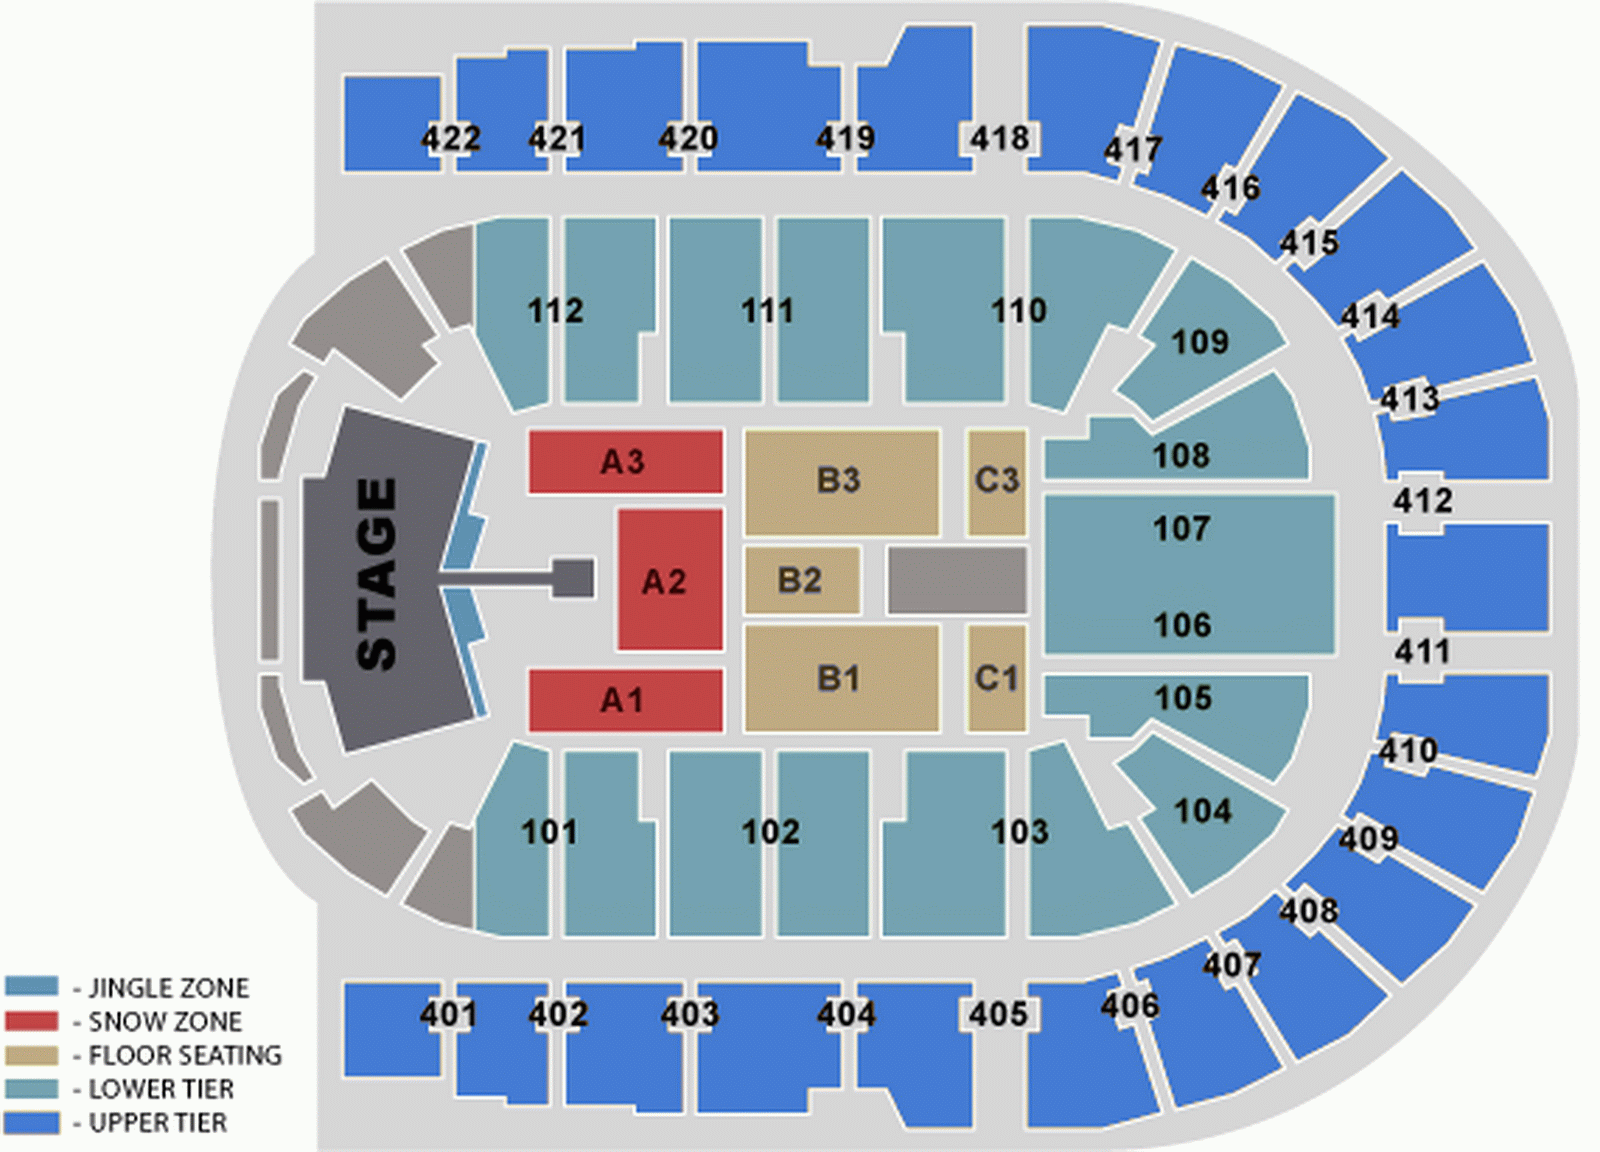 O2 Arena London seating plan Detailed seat numbers